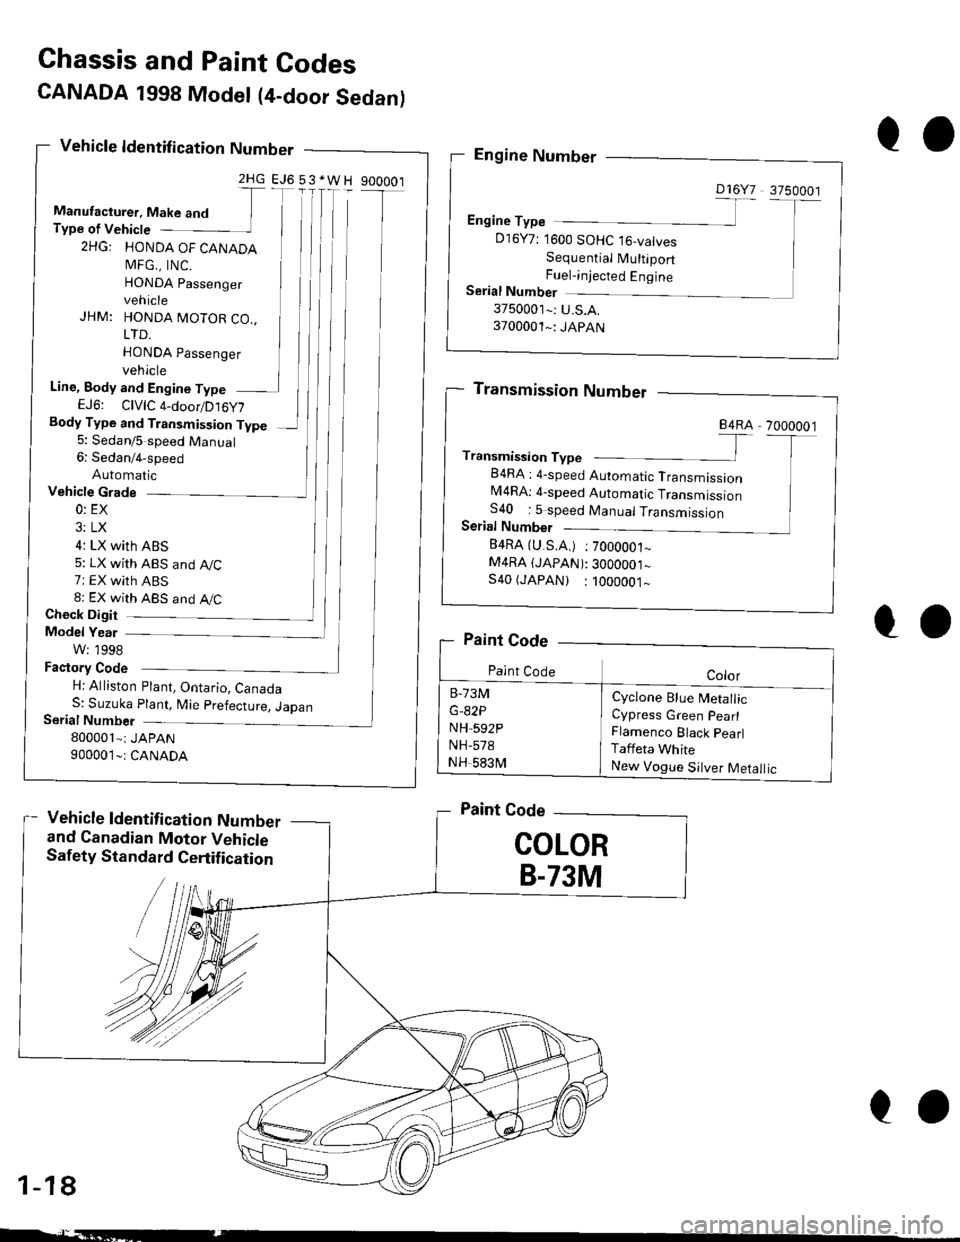 HONDA CIVIC 1999 6.G Workshop Manual CANADA 1998 Model (4-door Sedanl
Vehicle ldentification Number
Chassis and Paint Codes
2HG.I
Manufacturer, Make andType of Vehicte I2HG: HONDA OF CANADA ]MFG,, INC.
HONDA passenger lvehicle
JHM: HONDA